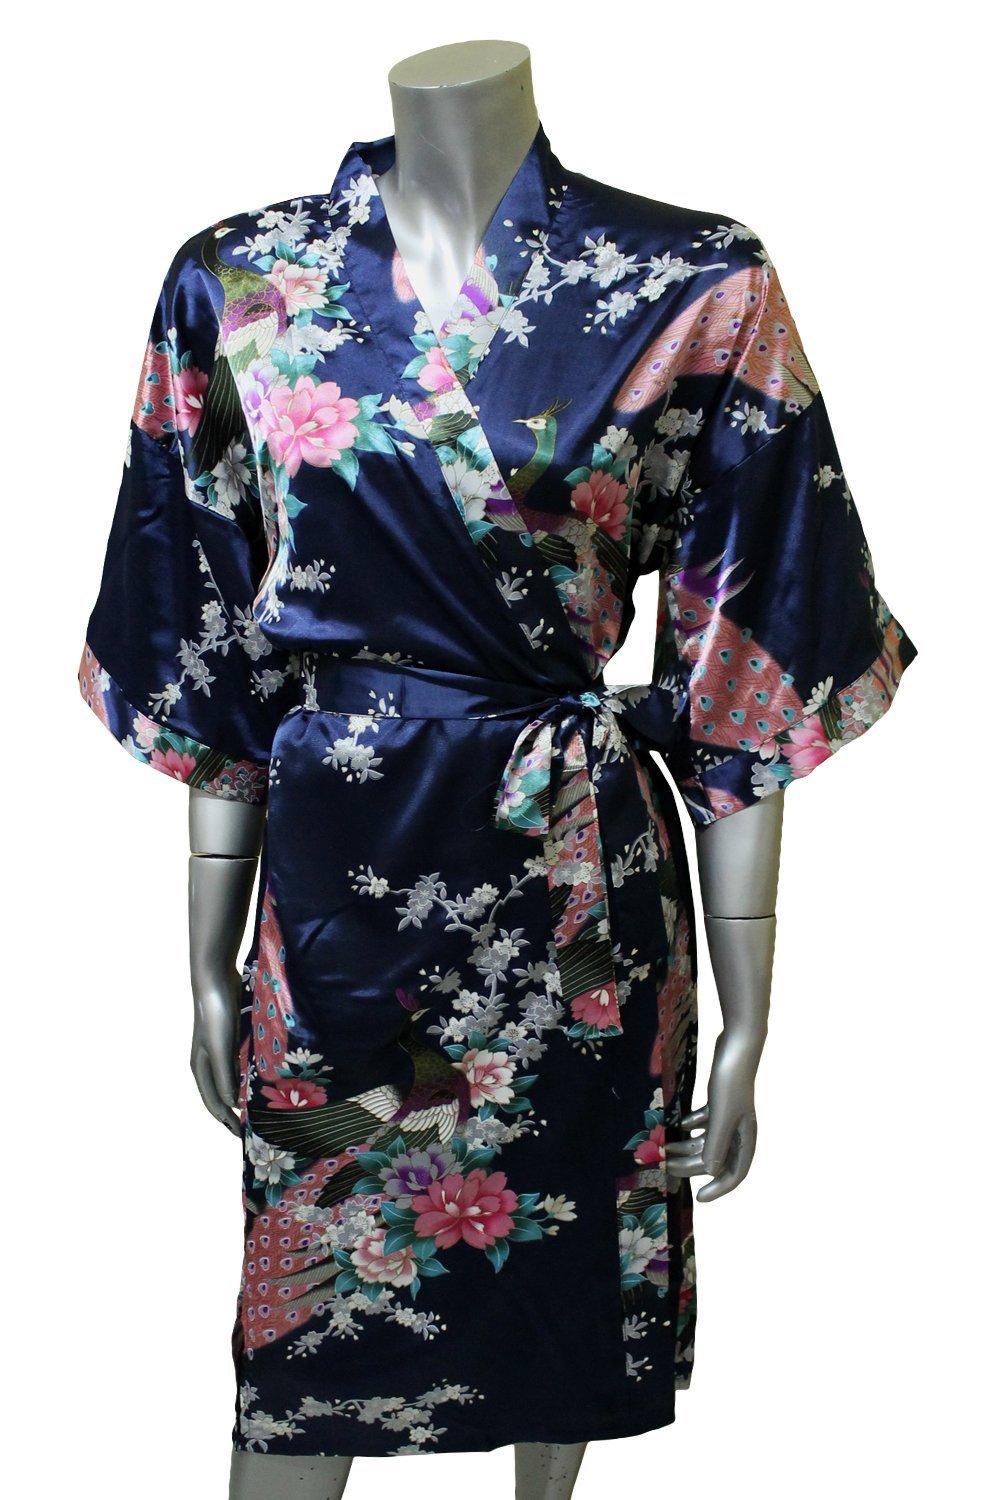 Women Kimono Silk Satin Bath Robe Pajamas Sleepwear Peacock Floral Navy ...